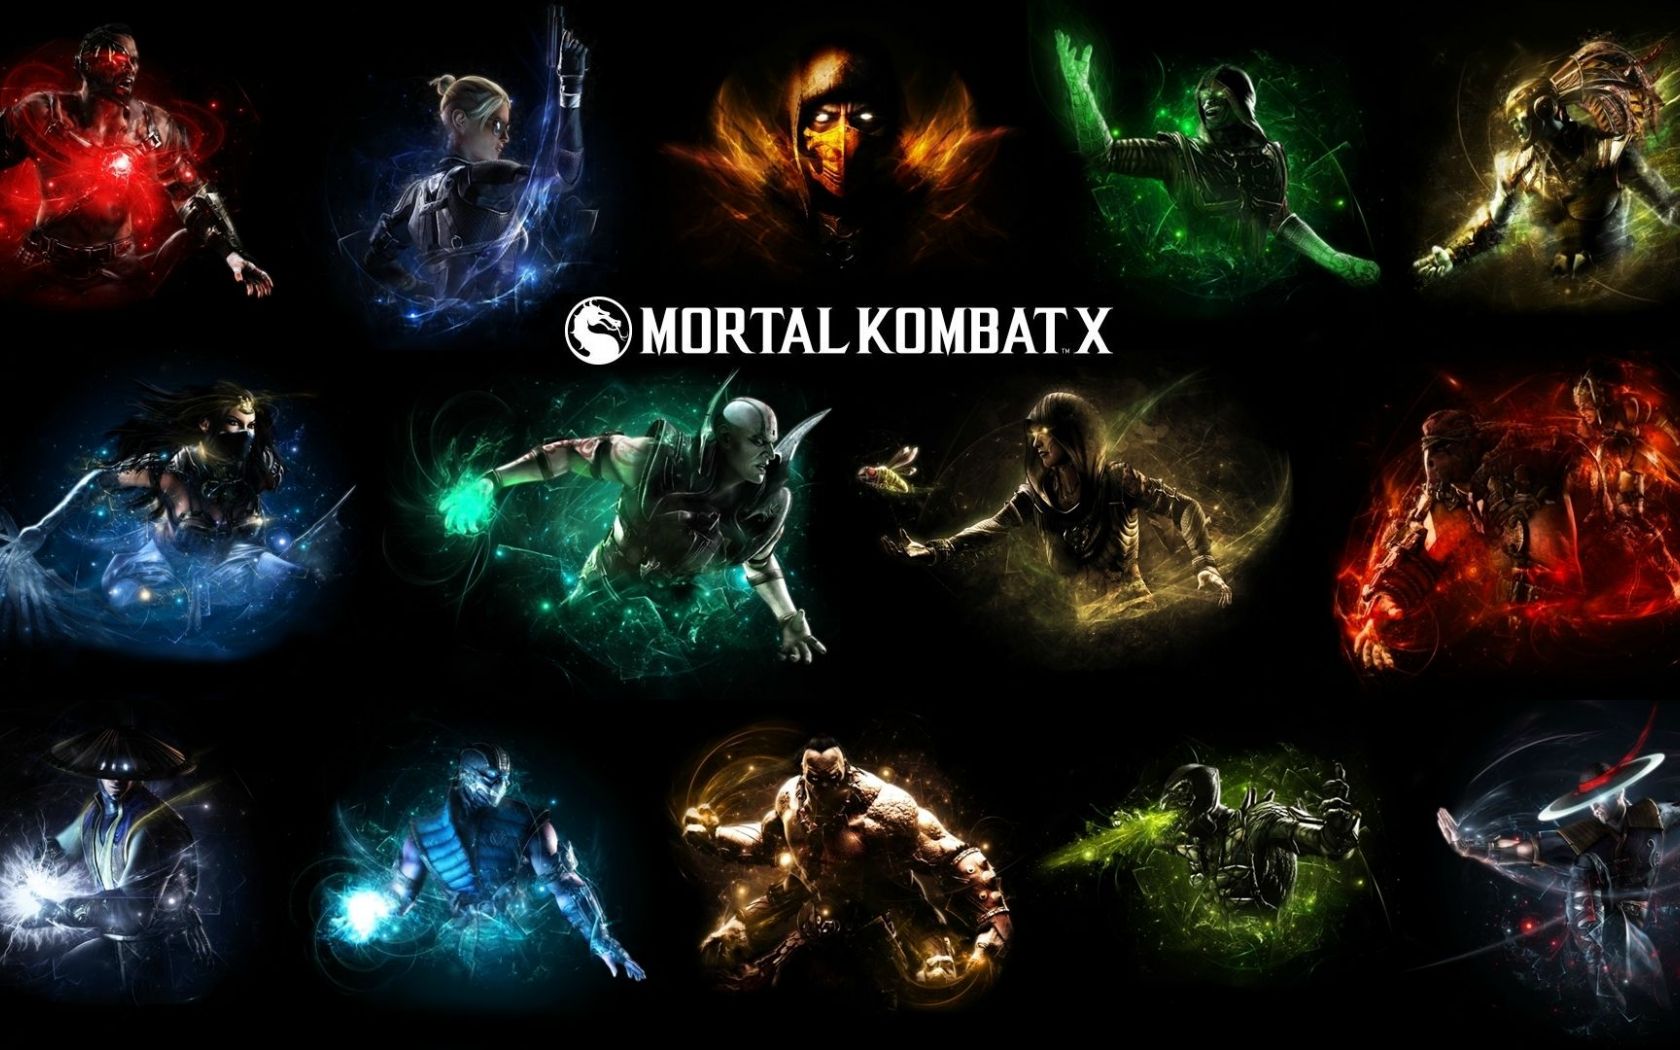 Free download Gorgeous Mortal Kombat X Wallpaper Full HD Picture [1920x1080] for your Desktop, Mobile & Tablet. Explore Mortal Kombat X HD Wallpaper. Mortal Kombat XL Wallpaper, Mortal Kombat